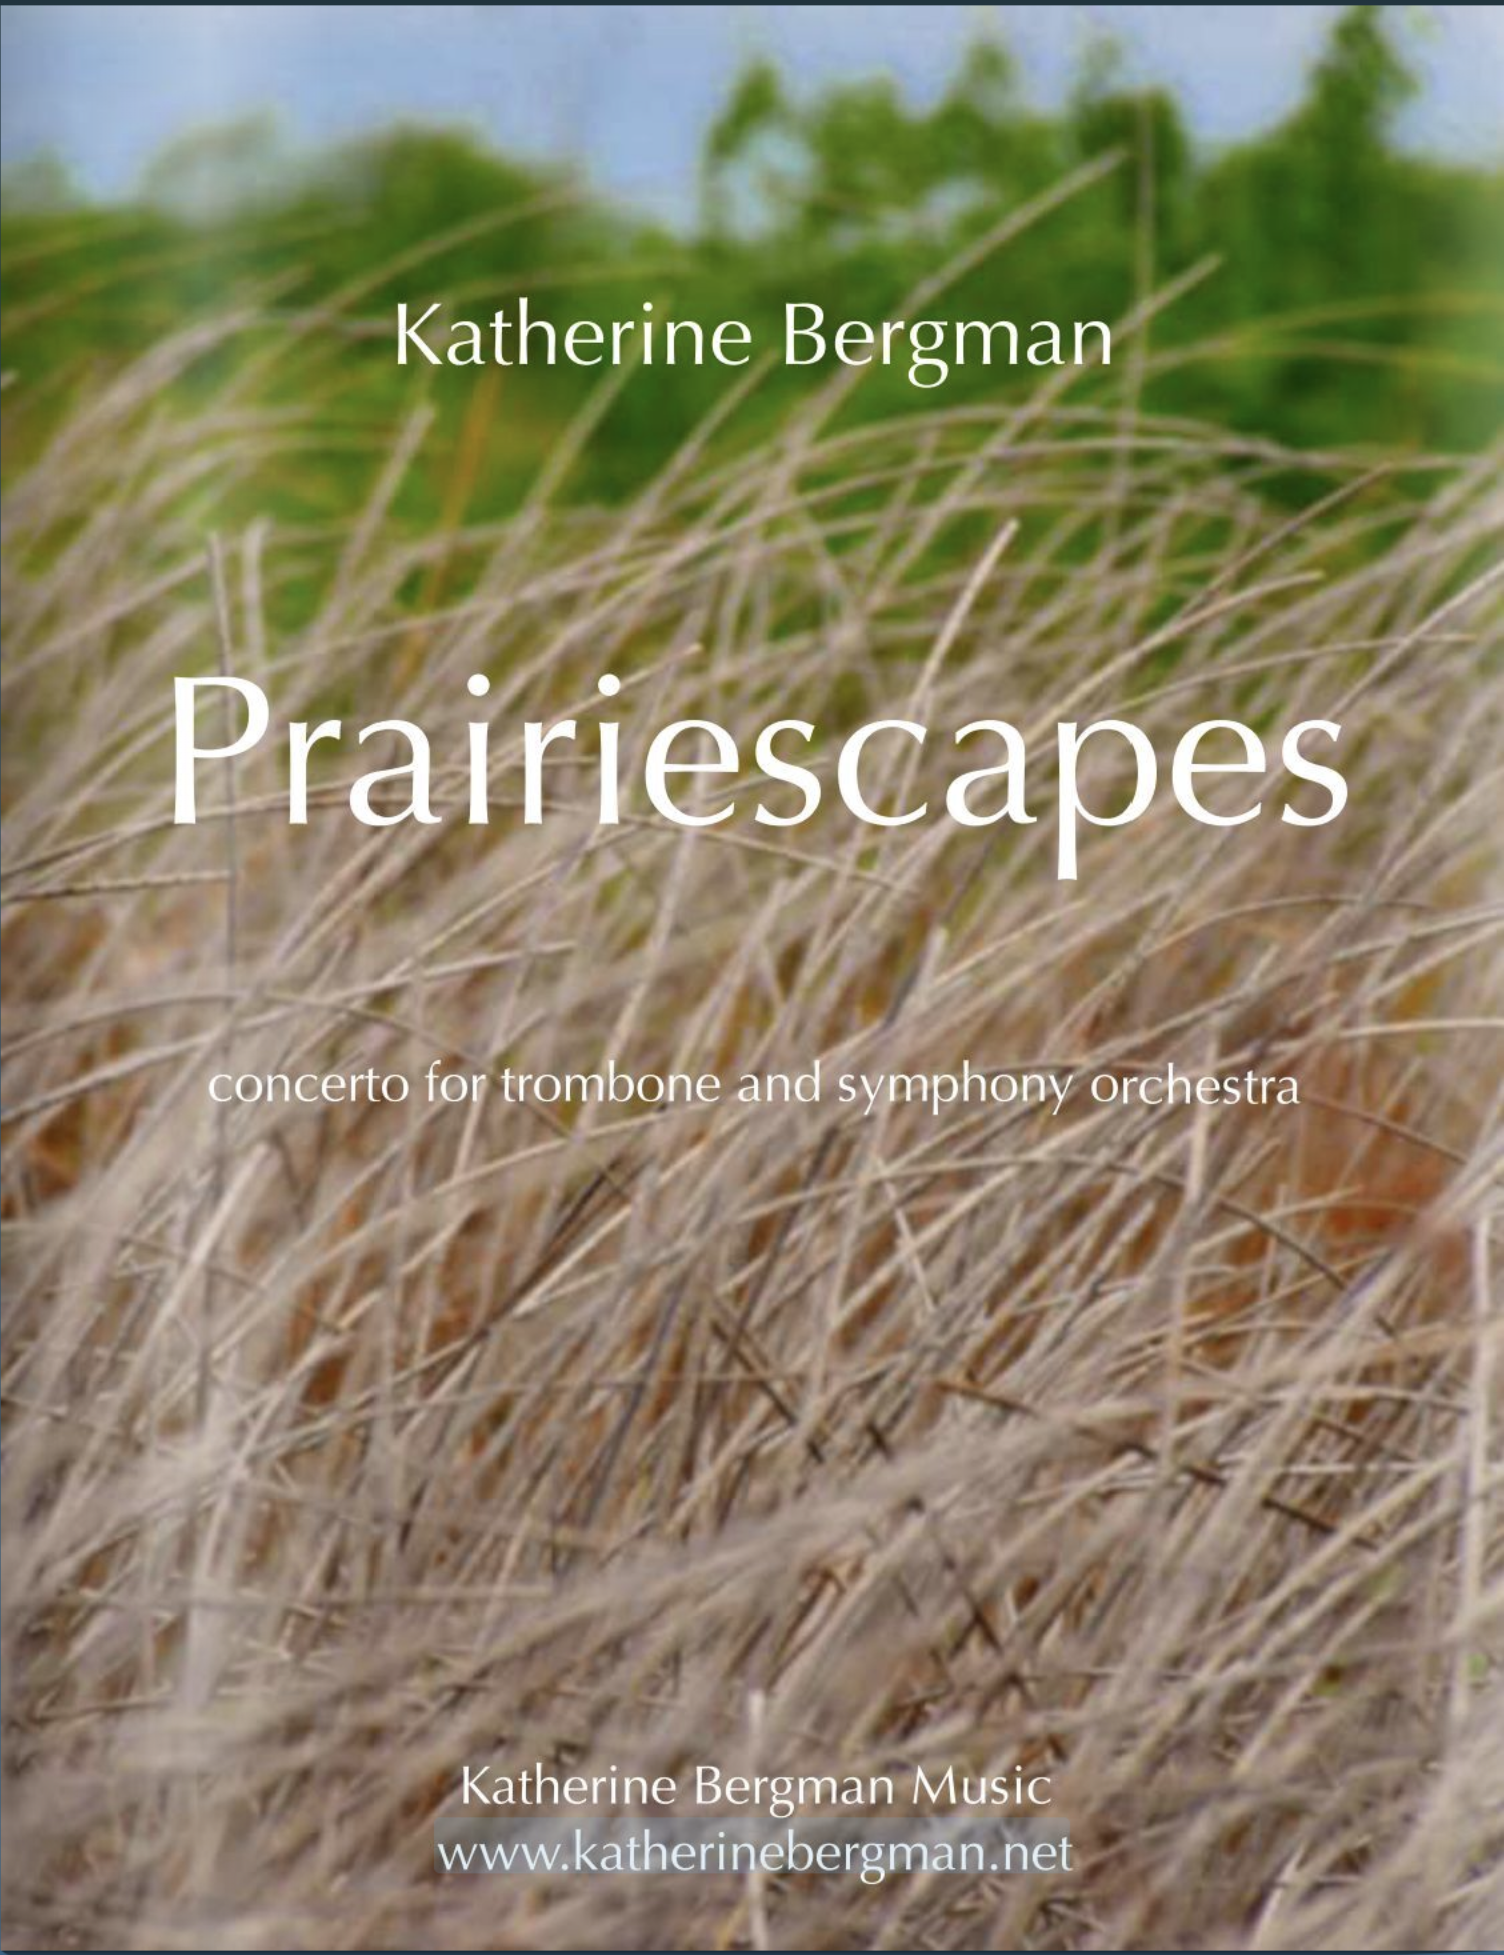 Prairiescapes by Katherine Bergman